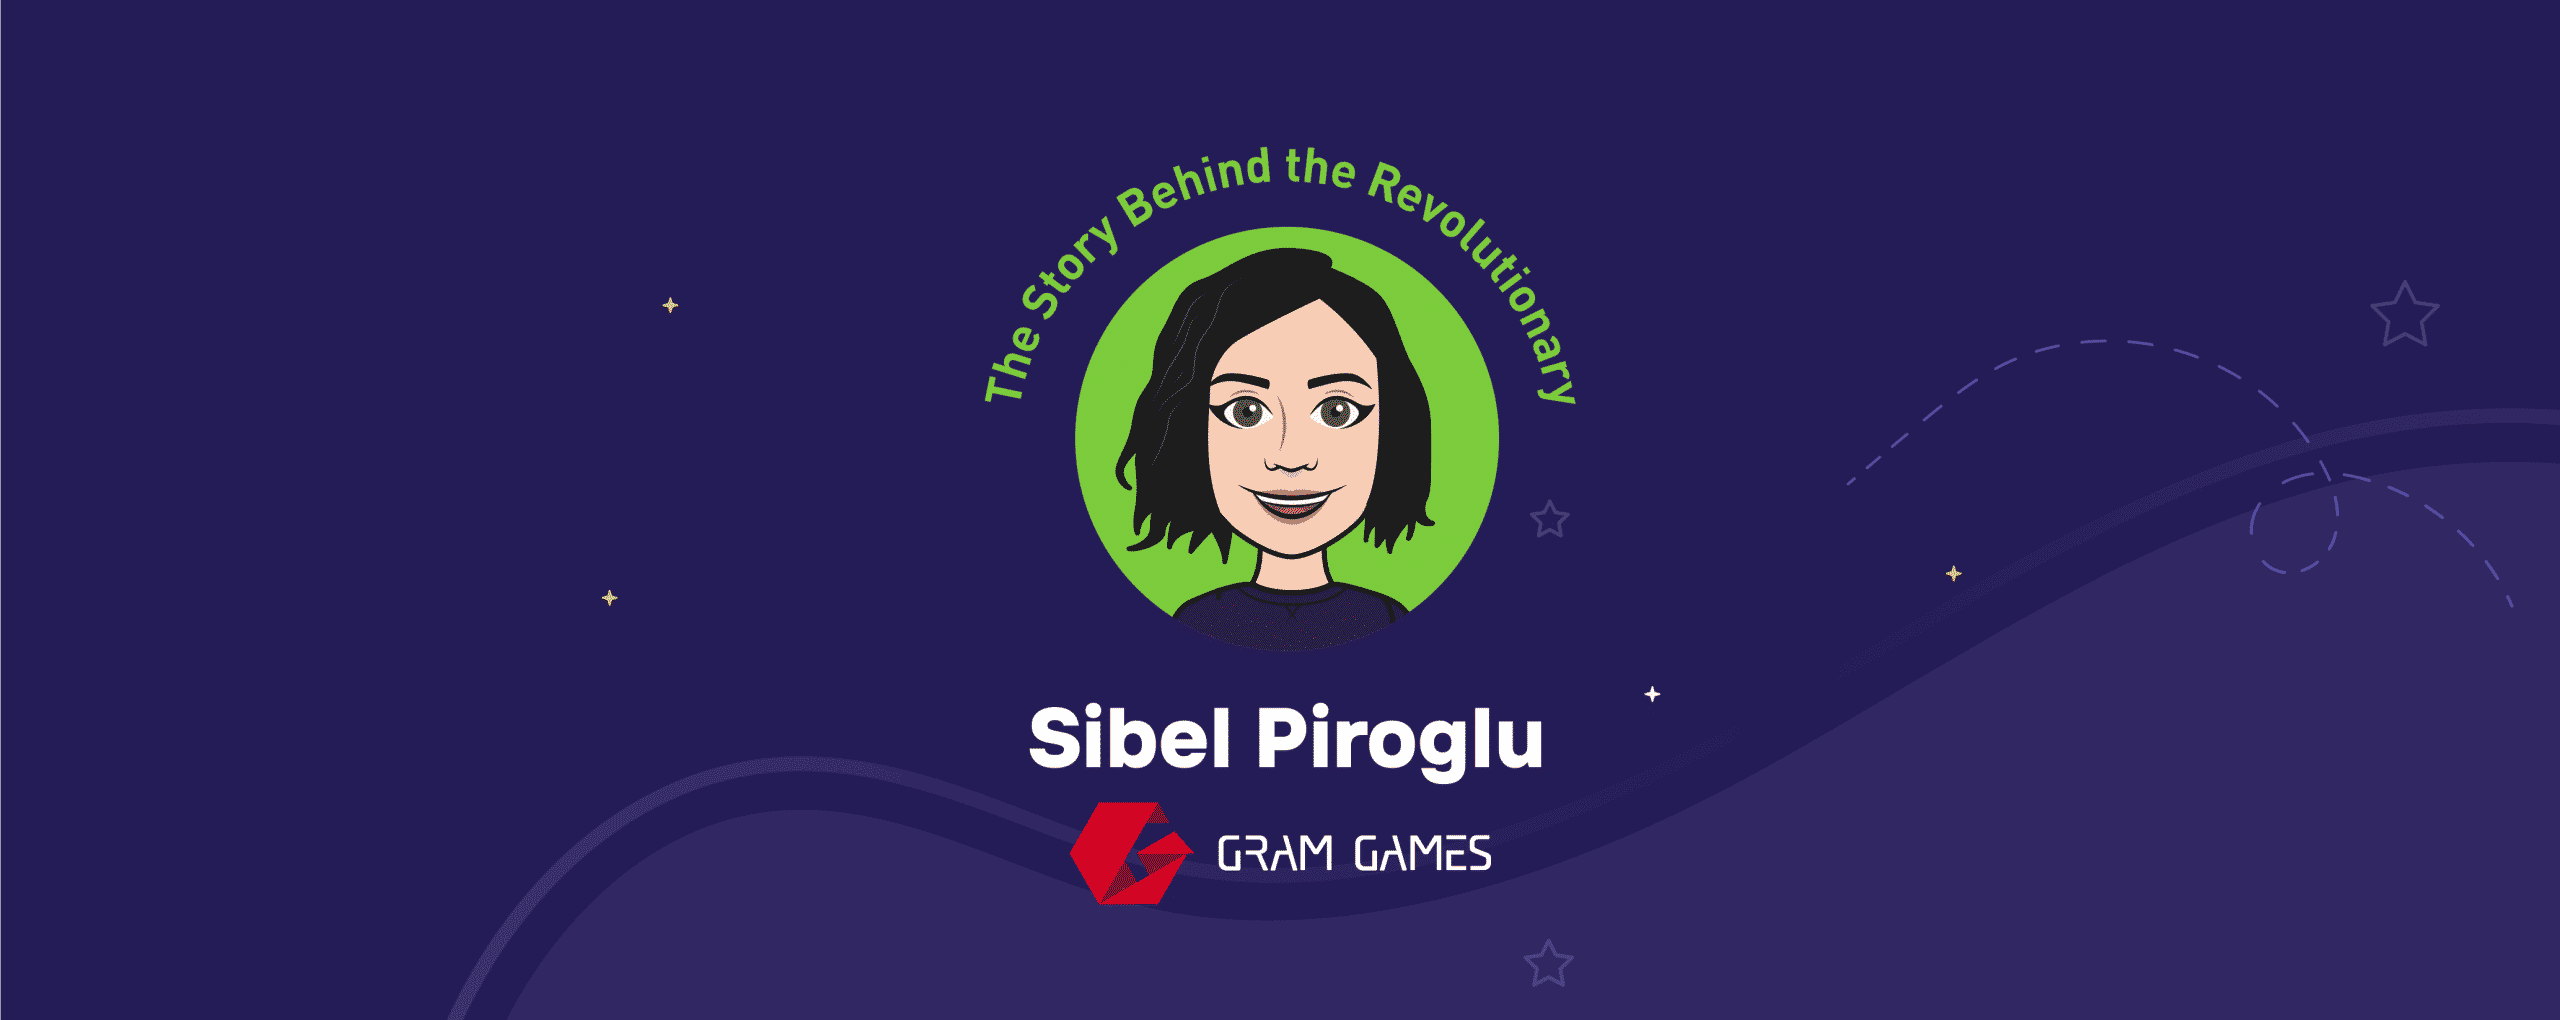 Mobile Revolutionary: Sibel Piroğlu